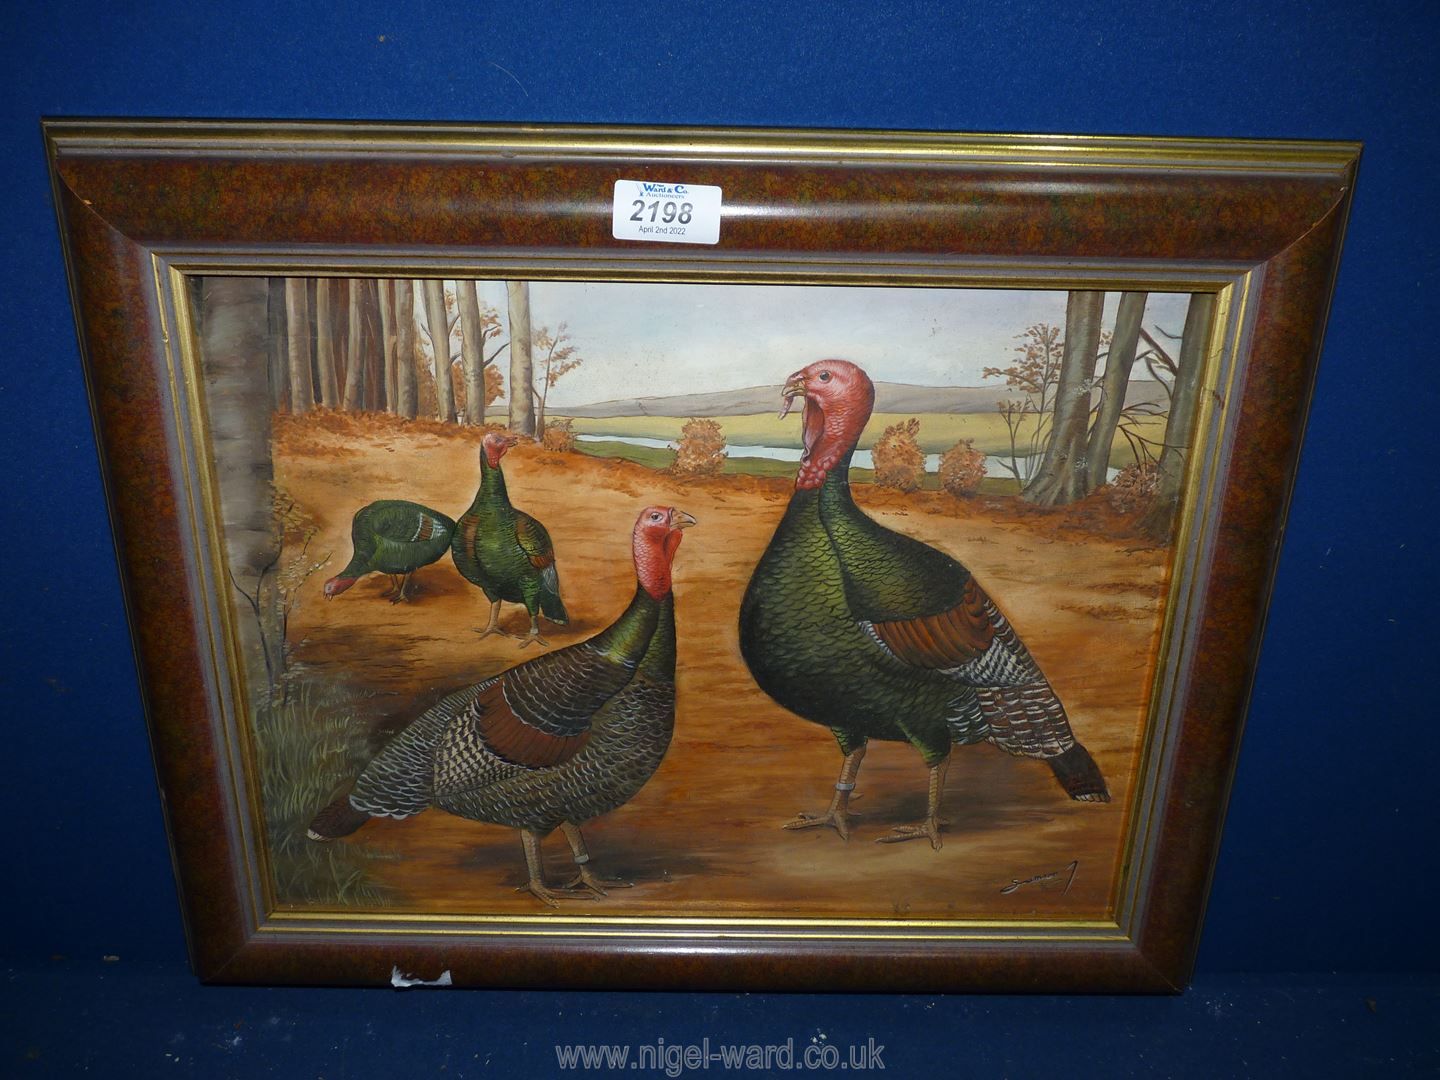 A framed oil on wood depicting wild turkeys, signed lower right Samson J (Jochen Samson).